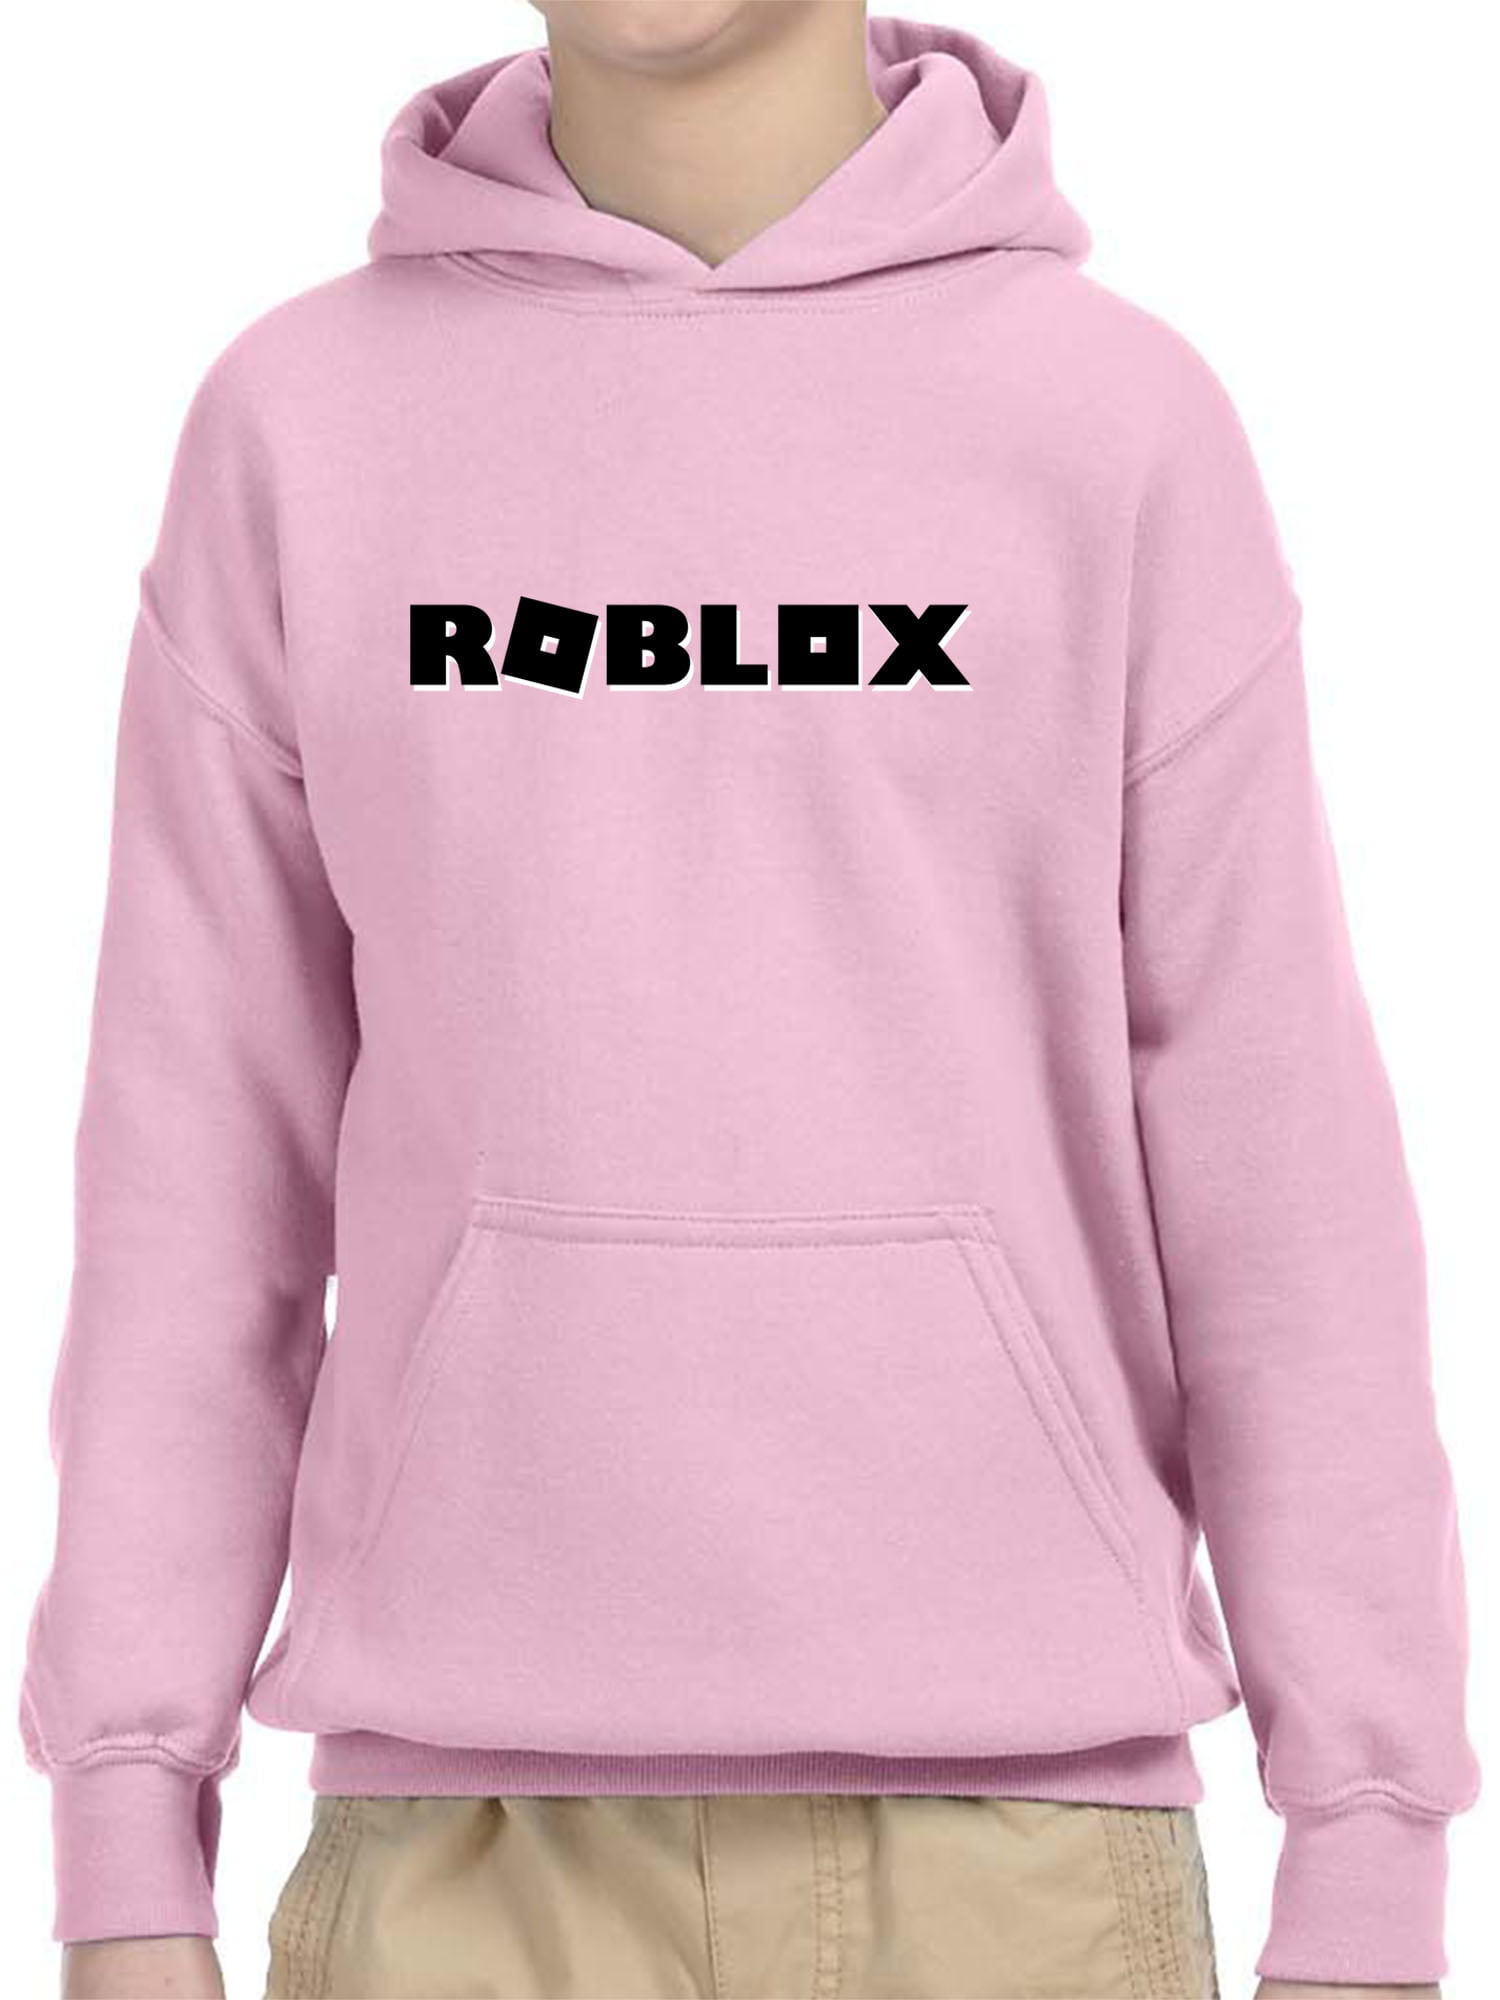 New Way New Way 1168 Youth Hoodie Roblox Block Logo Game Accent Unisex Pullover Sweatshirt Medium Light Pink Walmart Com Walmart Com - roblox light blue hoodie